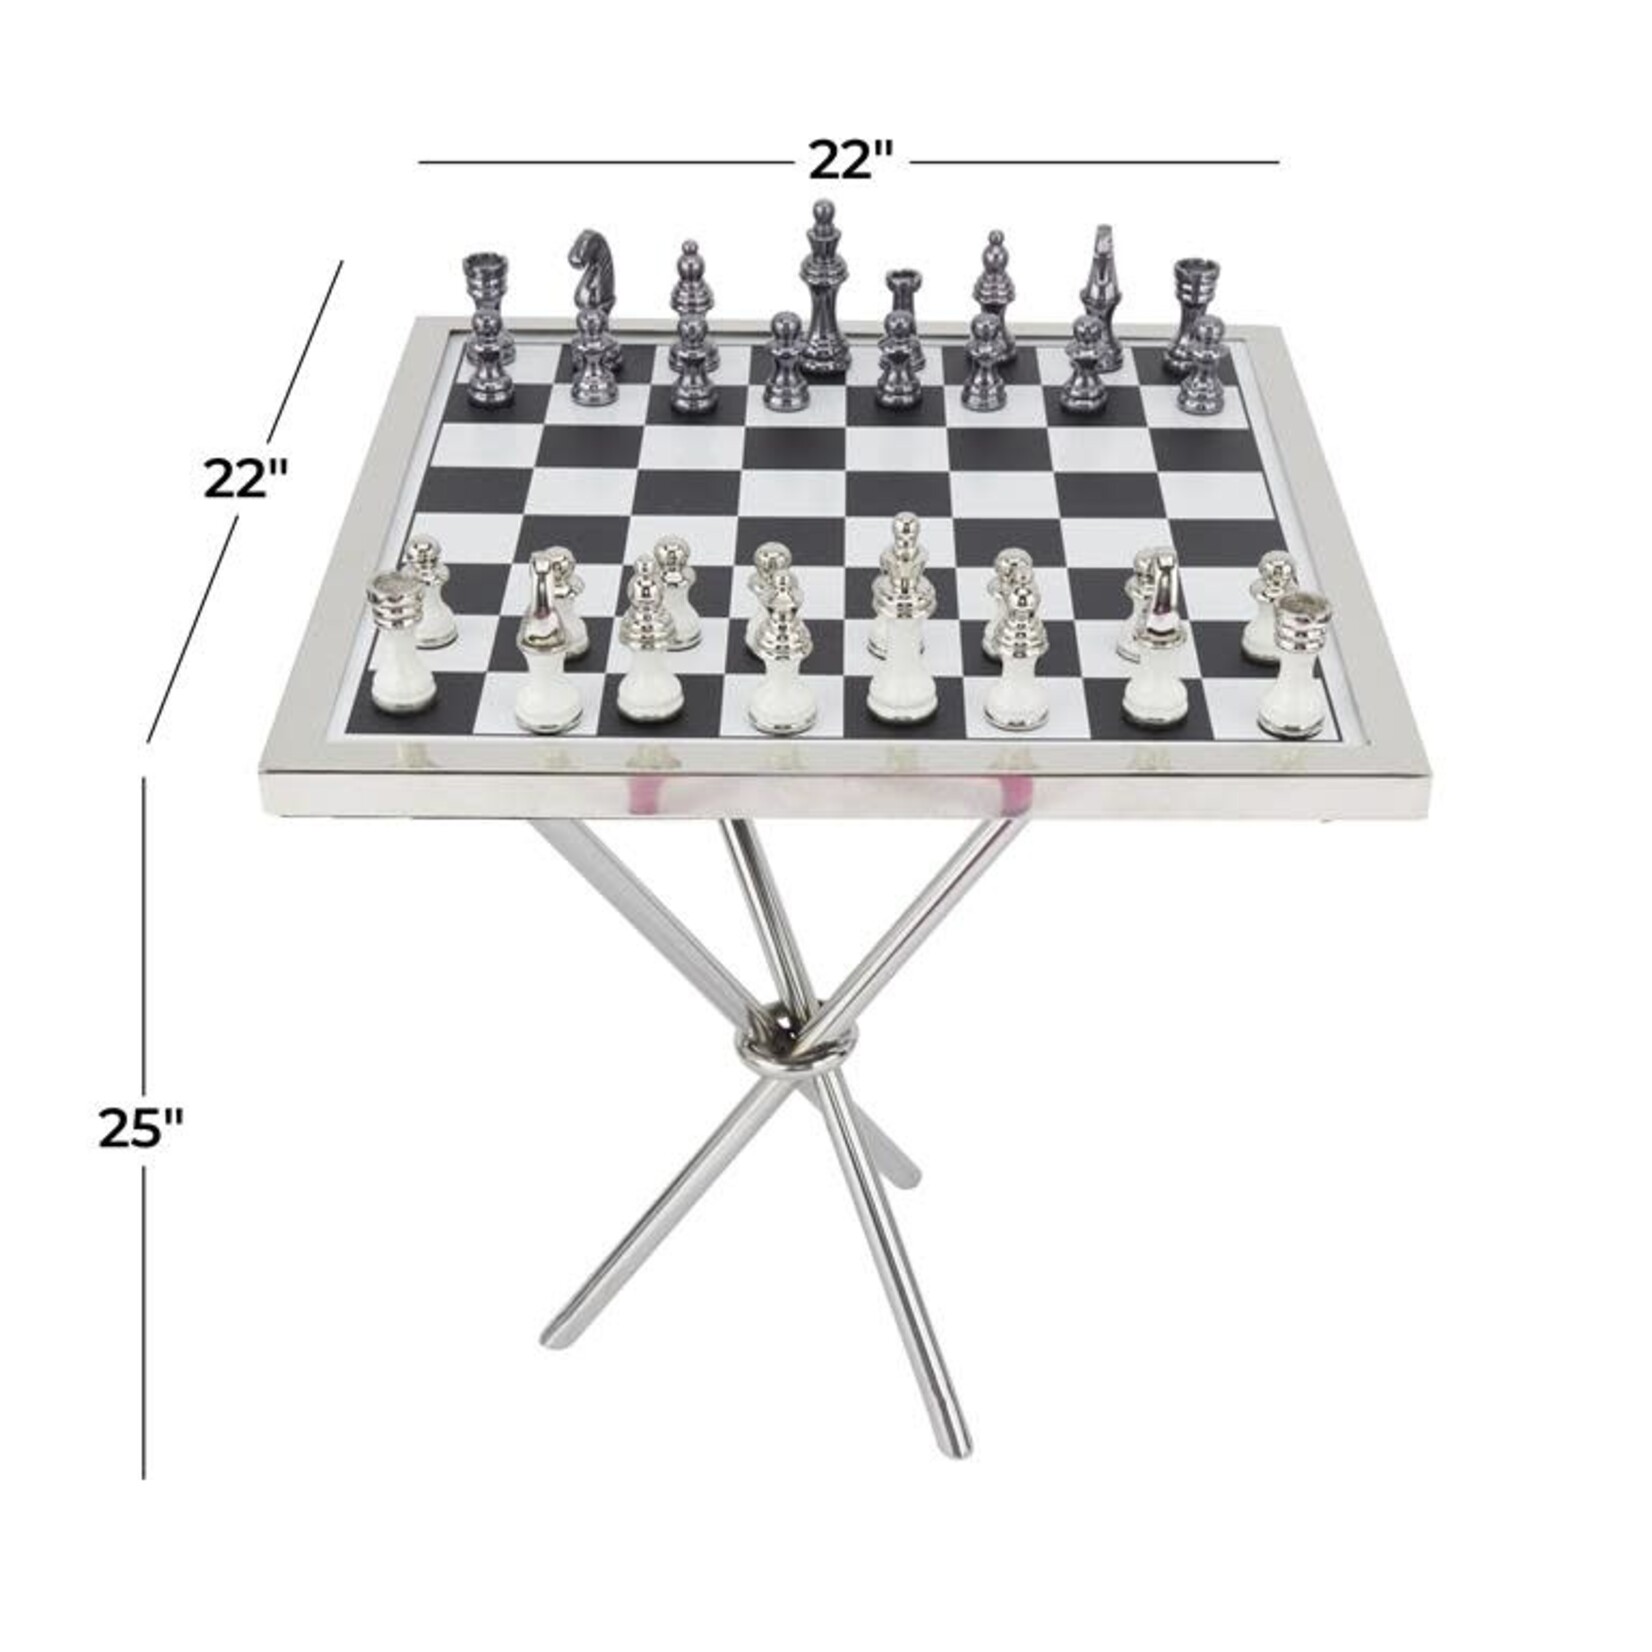 UMA Enterprises 75343 Silver Aluminum Chess Game Set 22"x22"x25"